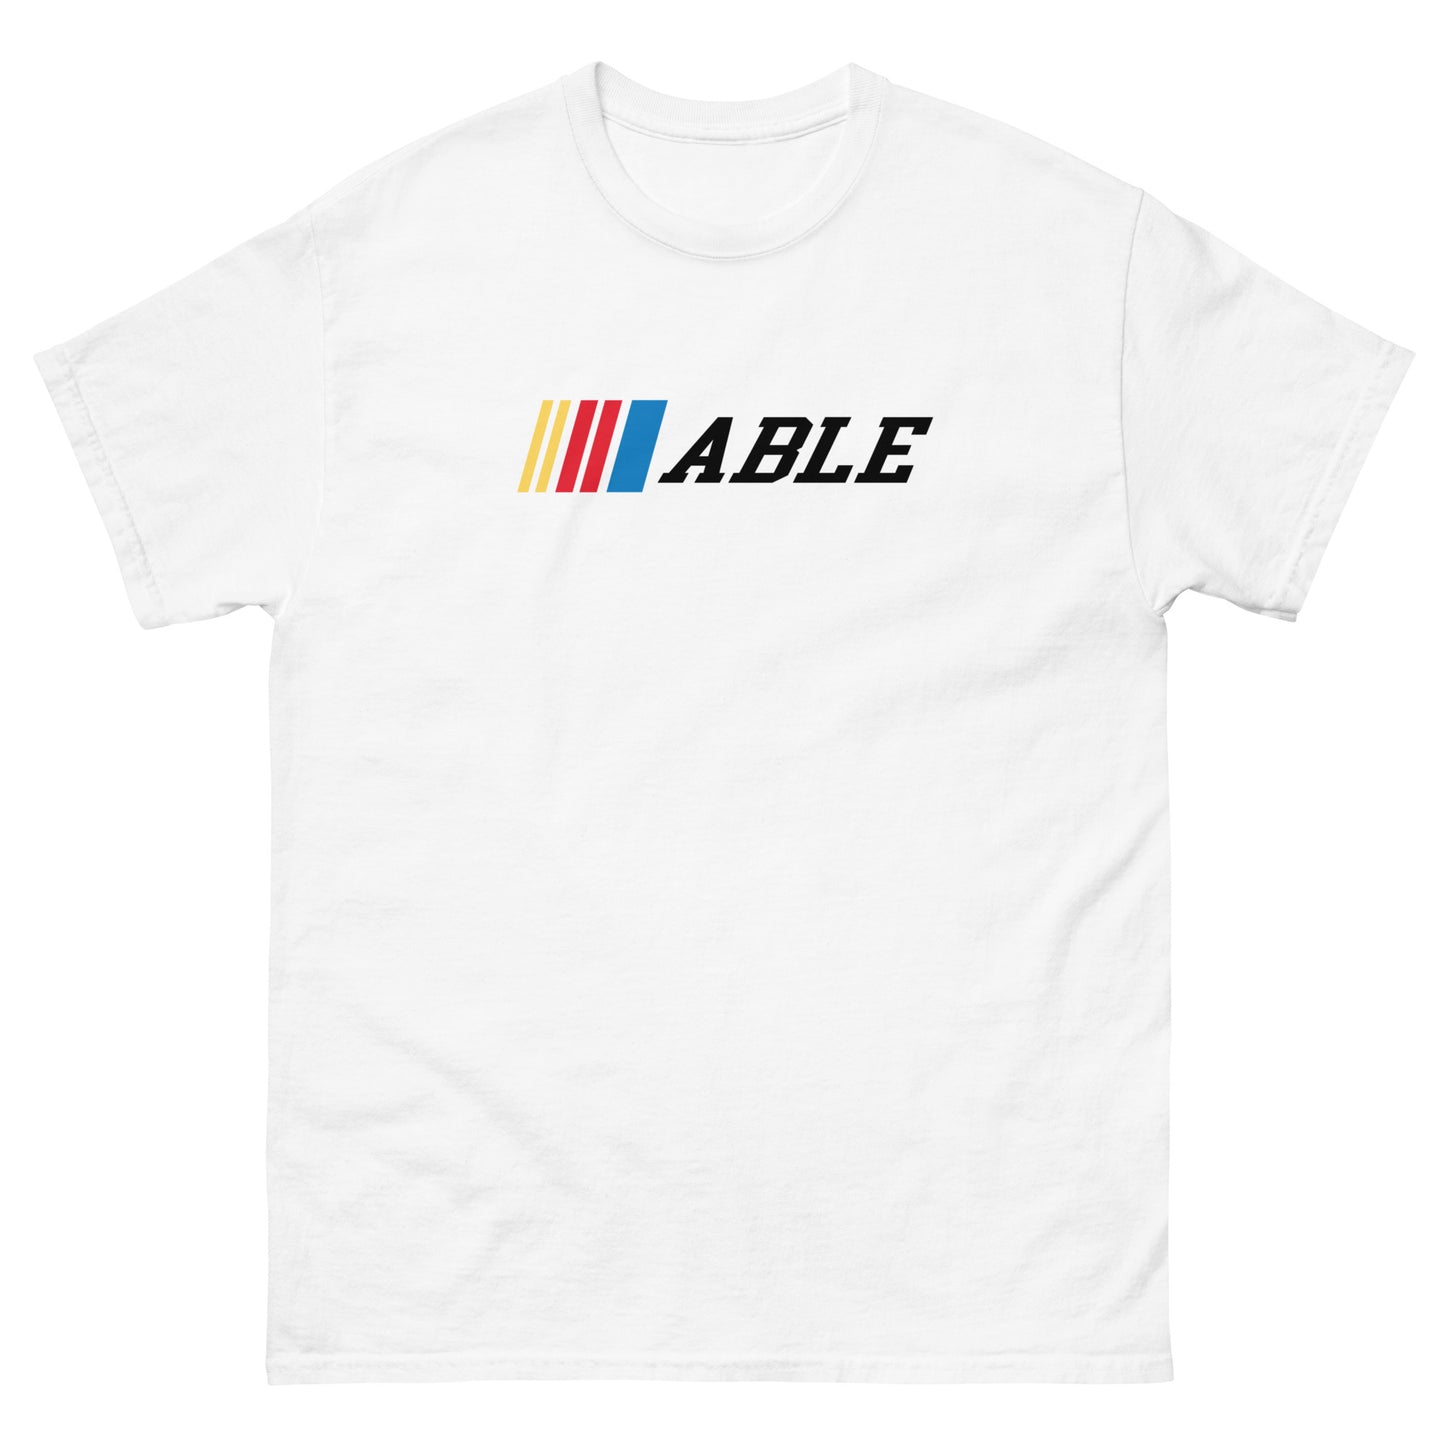 ABLE's Racing Tee